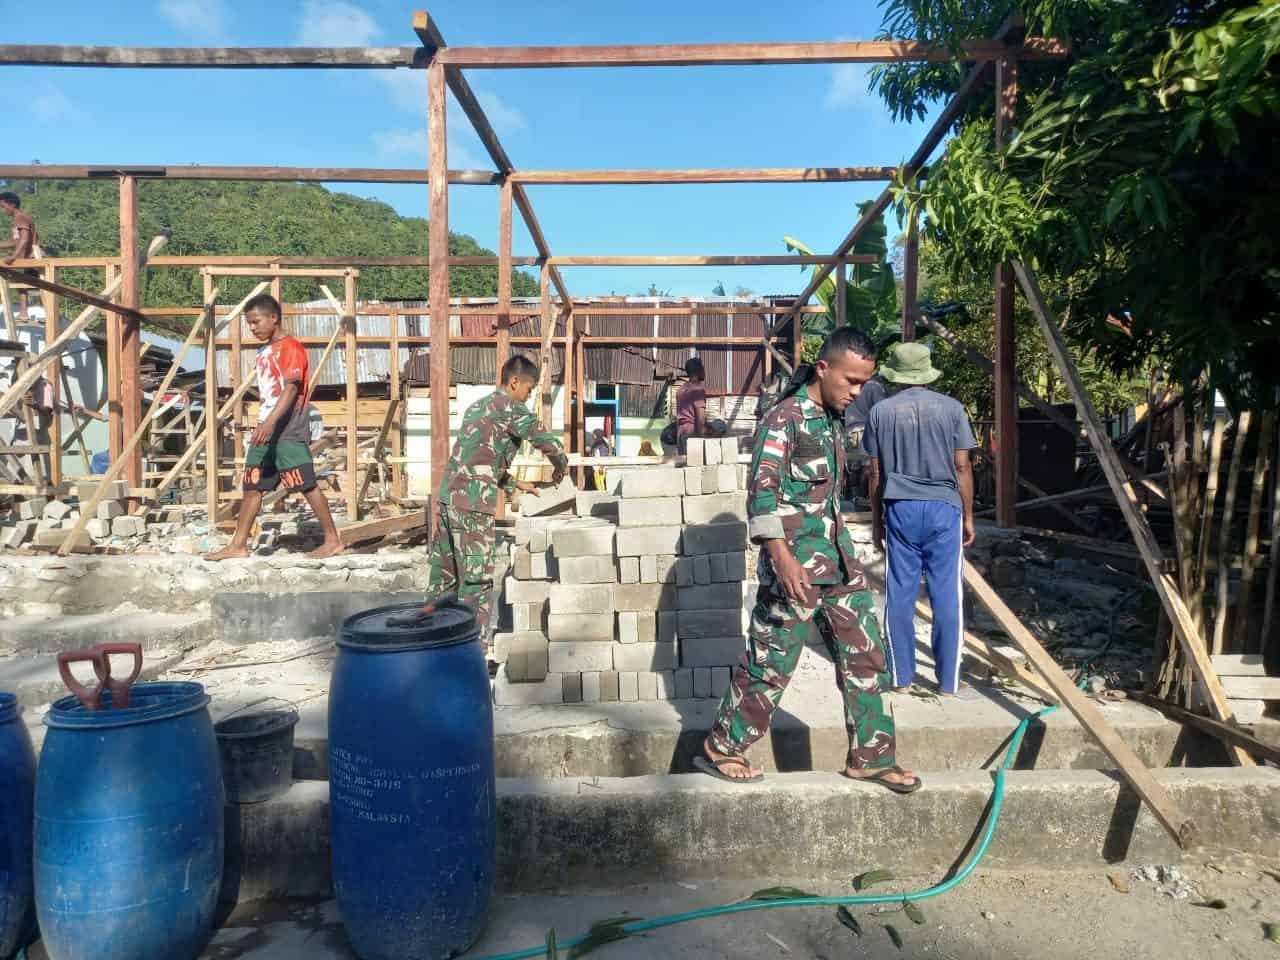 Bantu Warga Kurang Mampu, Satgas Pengamanan Maluku Utara Yonarhanud 11/WBY Bedah Rumah Warga